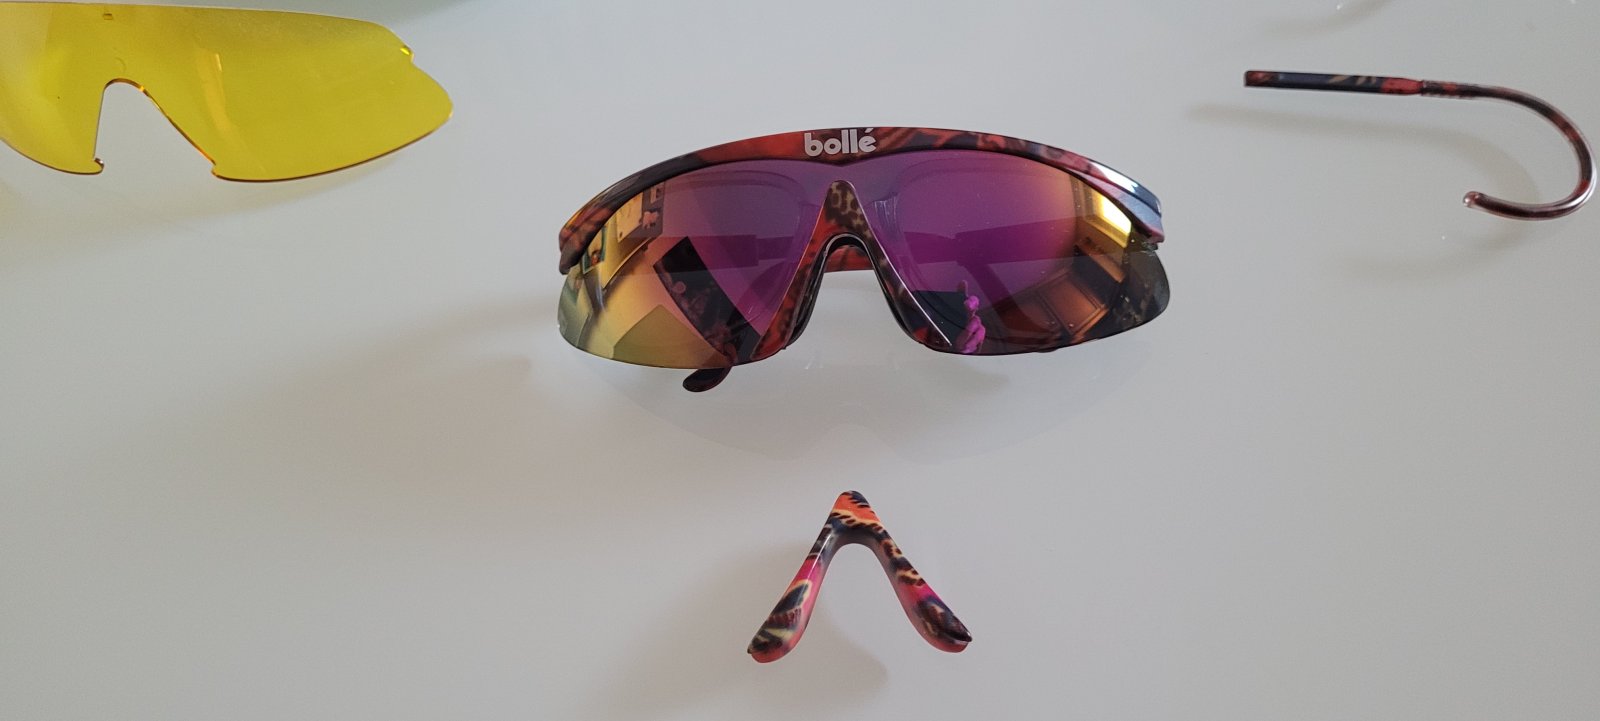 Erledigt - Bolle Microedge II Radbrille | MTB-News.de | IBC Mountainbike  Forum